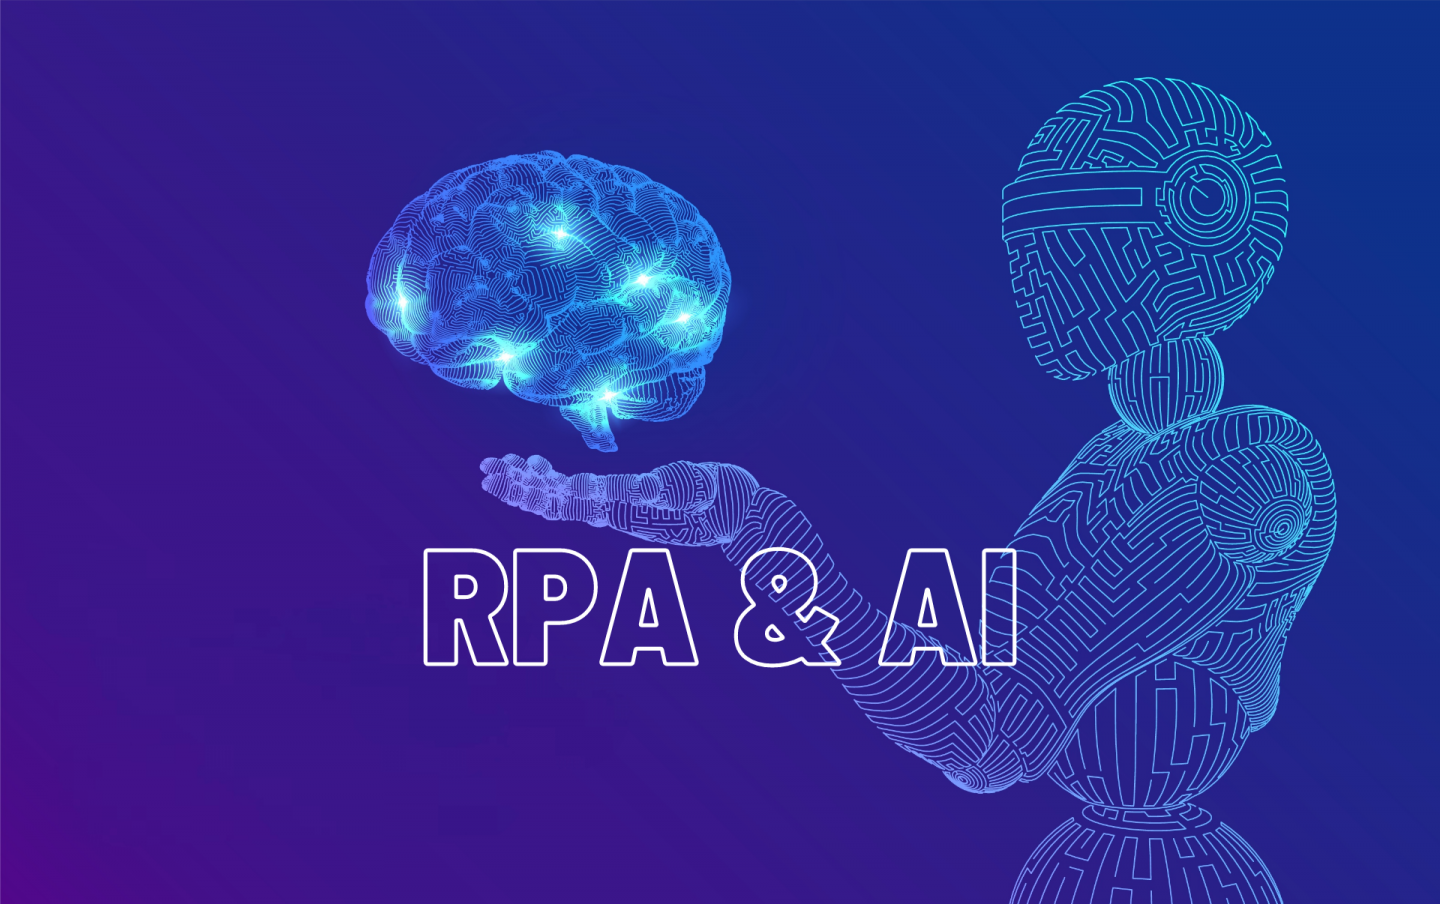 Robot & AI brain